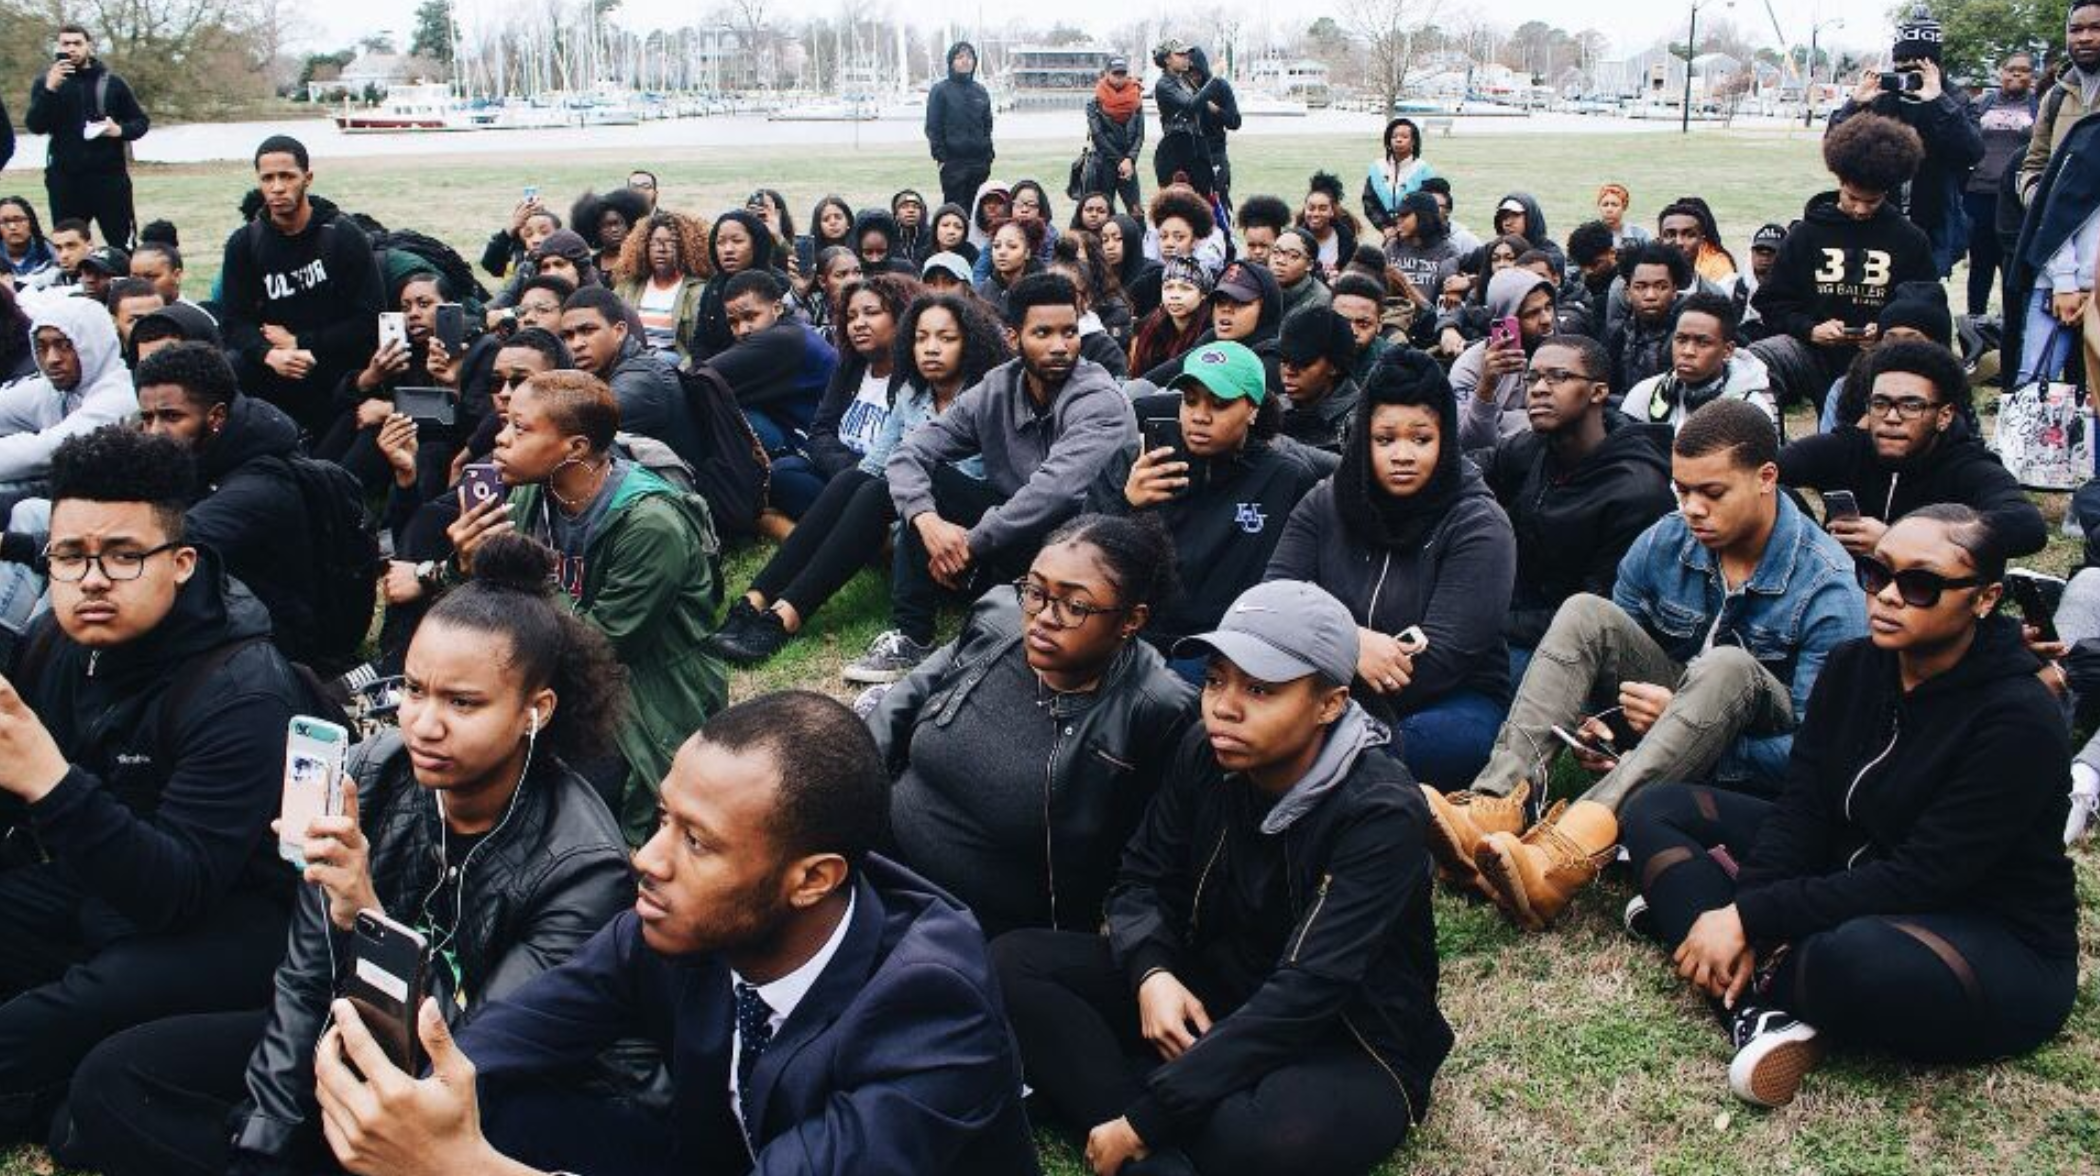 03/02/18: Hampton Univ. students launch #HopeForHampton protest